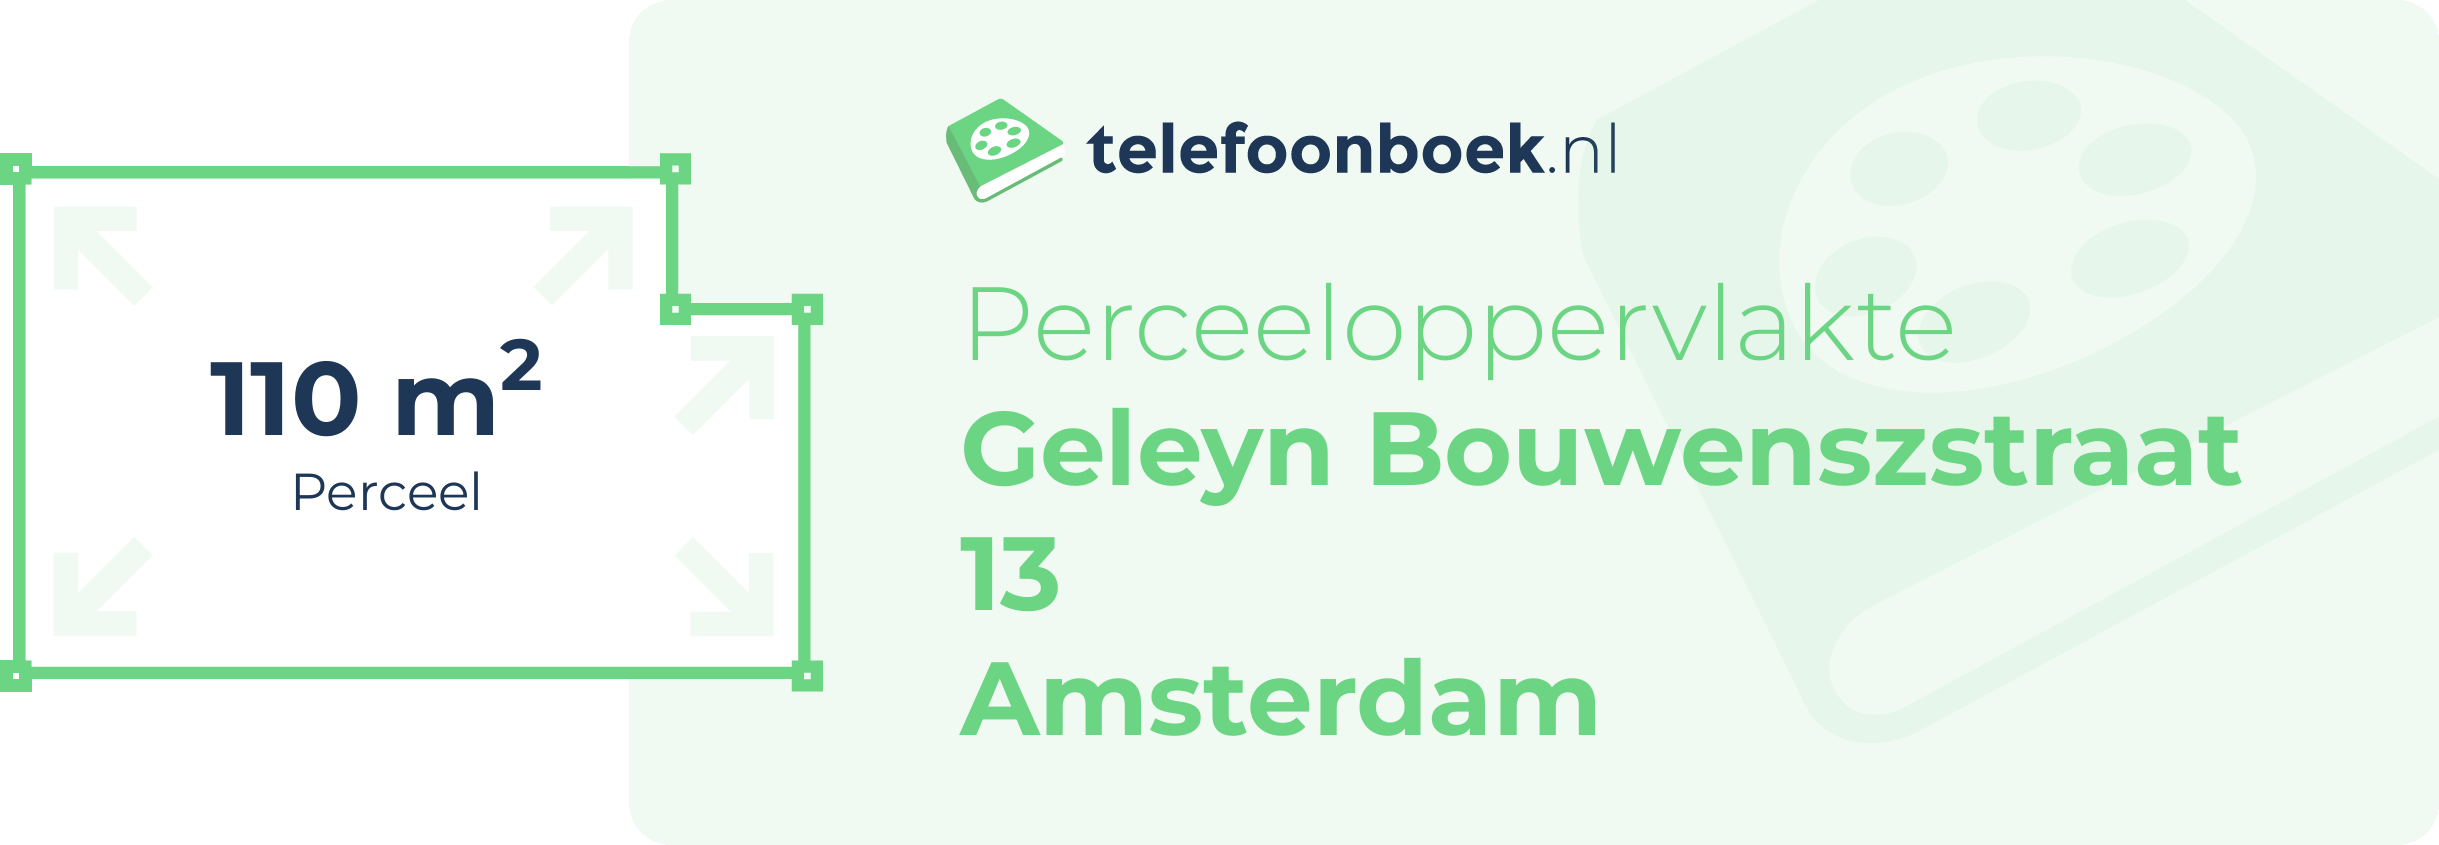 Perceeloppervlakte Geleyn Bouwenszstraat 13 Amsterdam